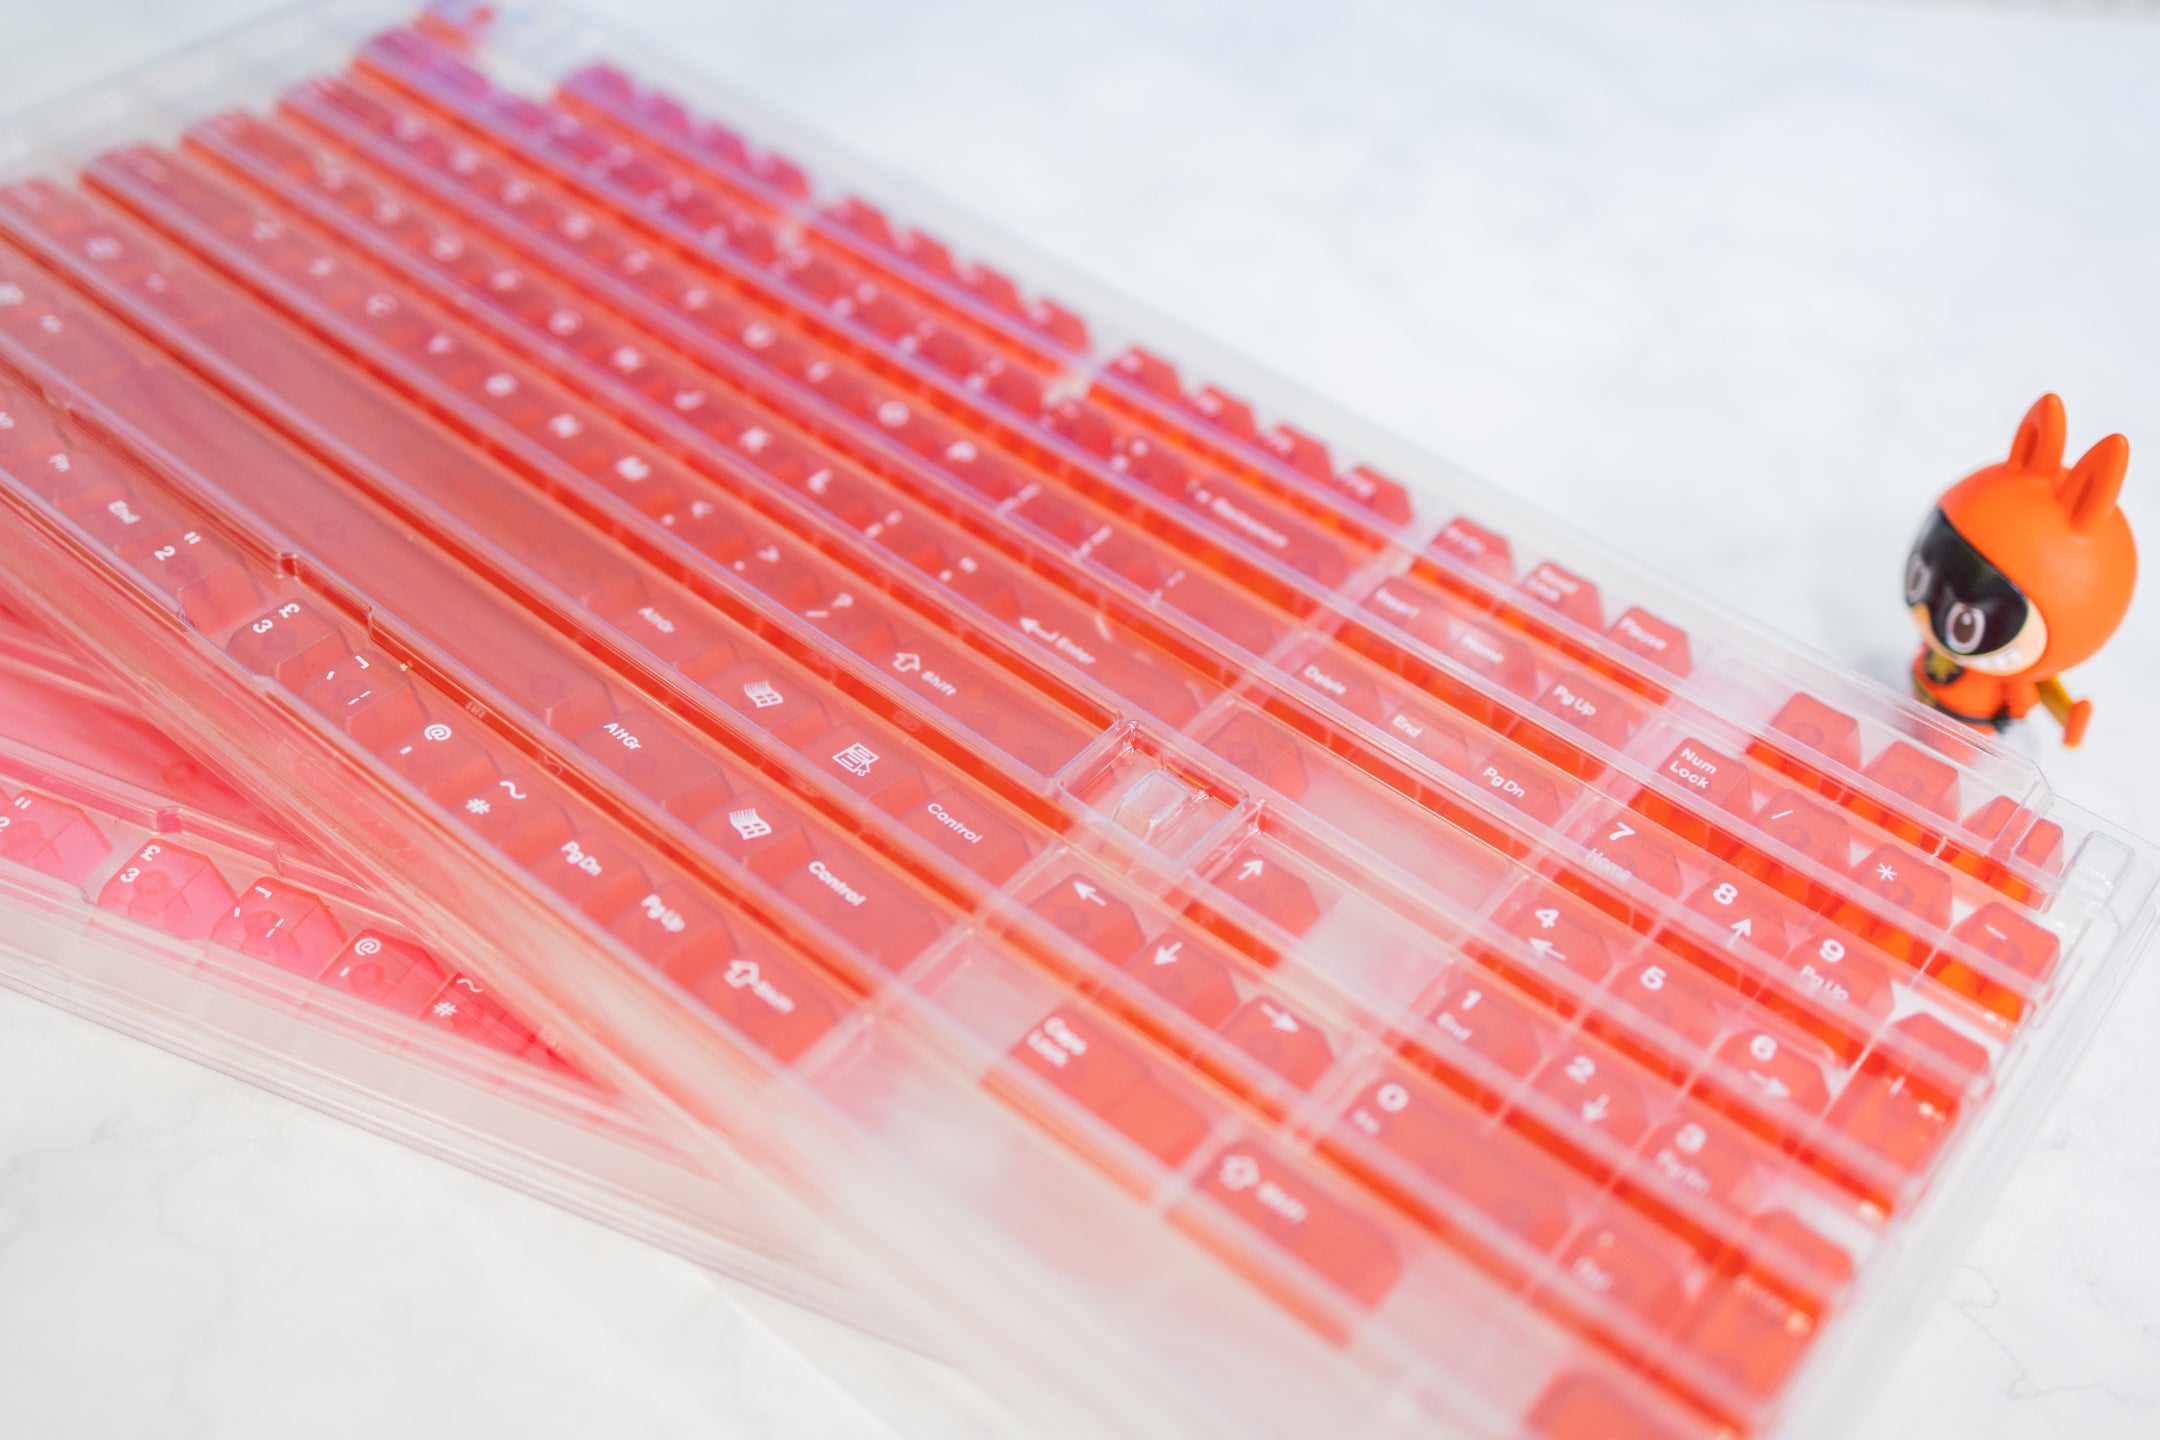 Lelelab Crystal Colour Printed Keycaps